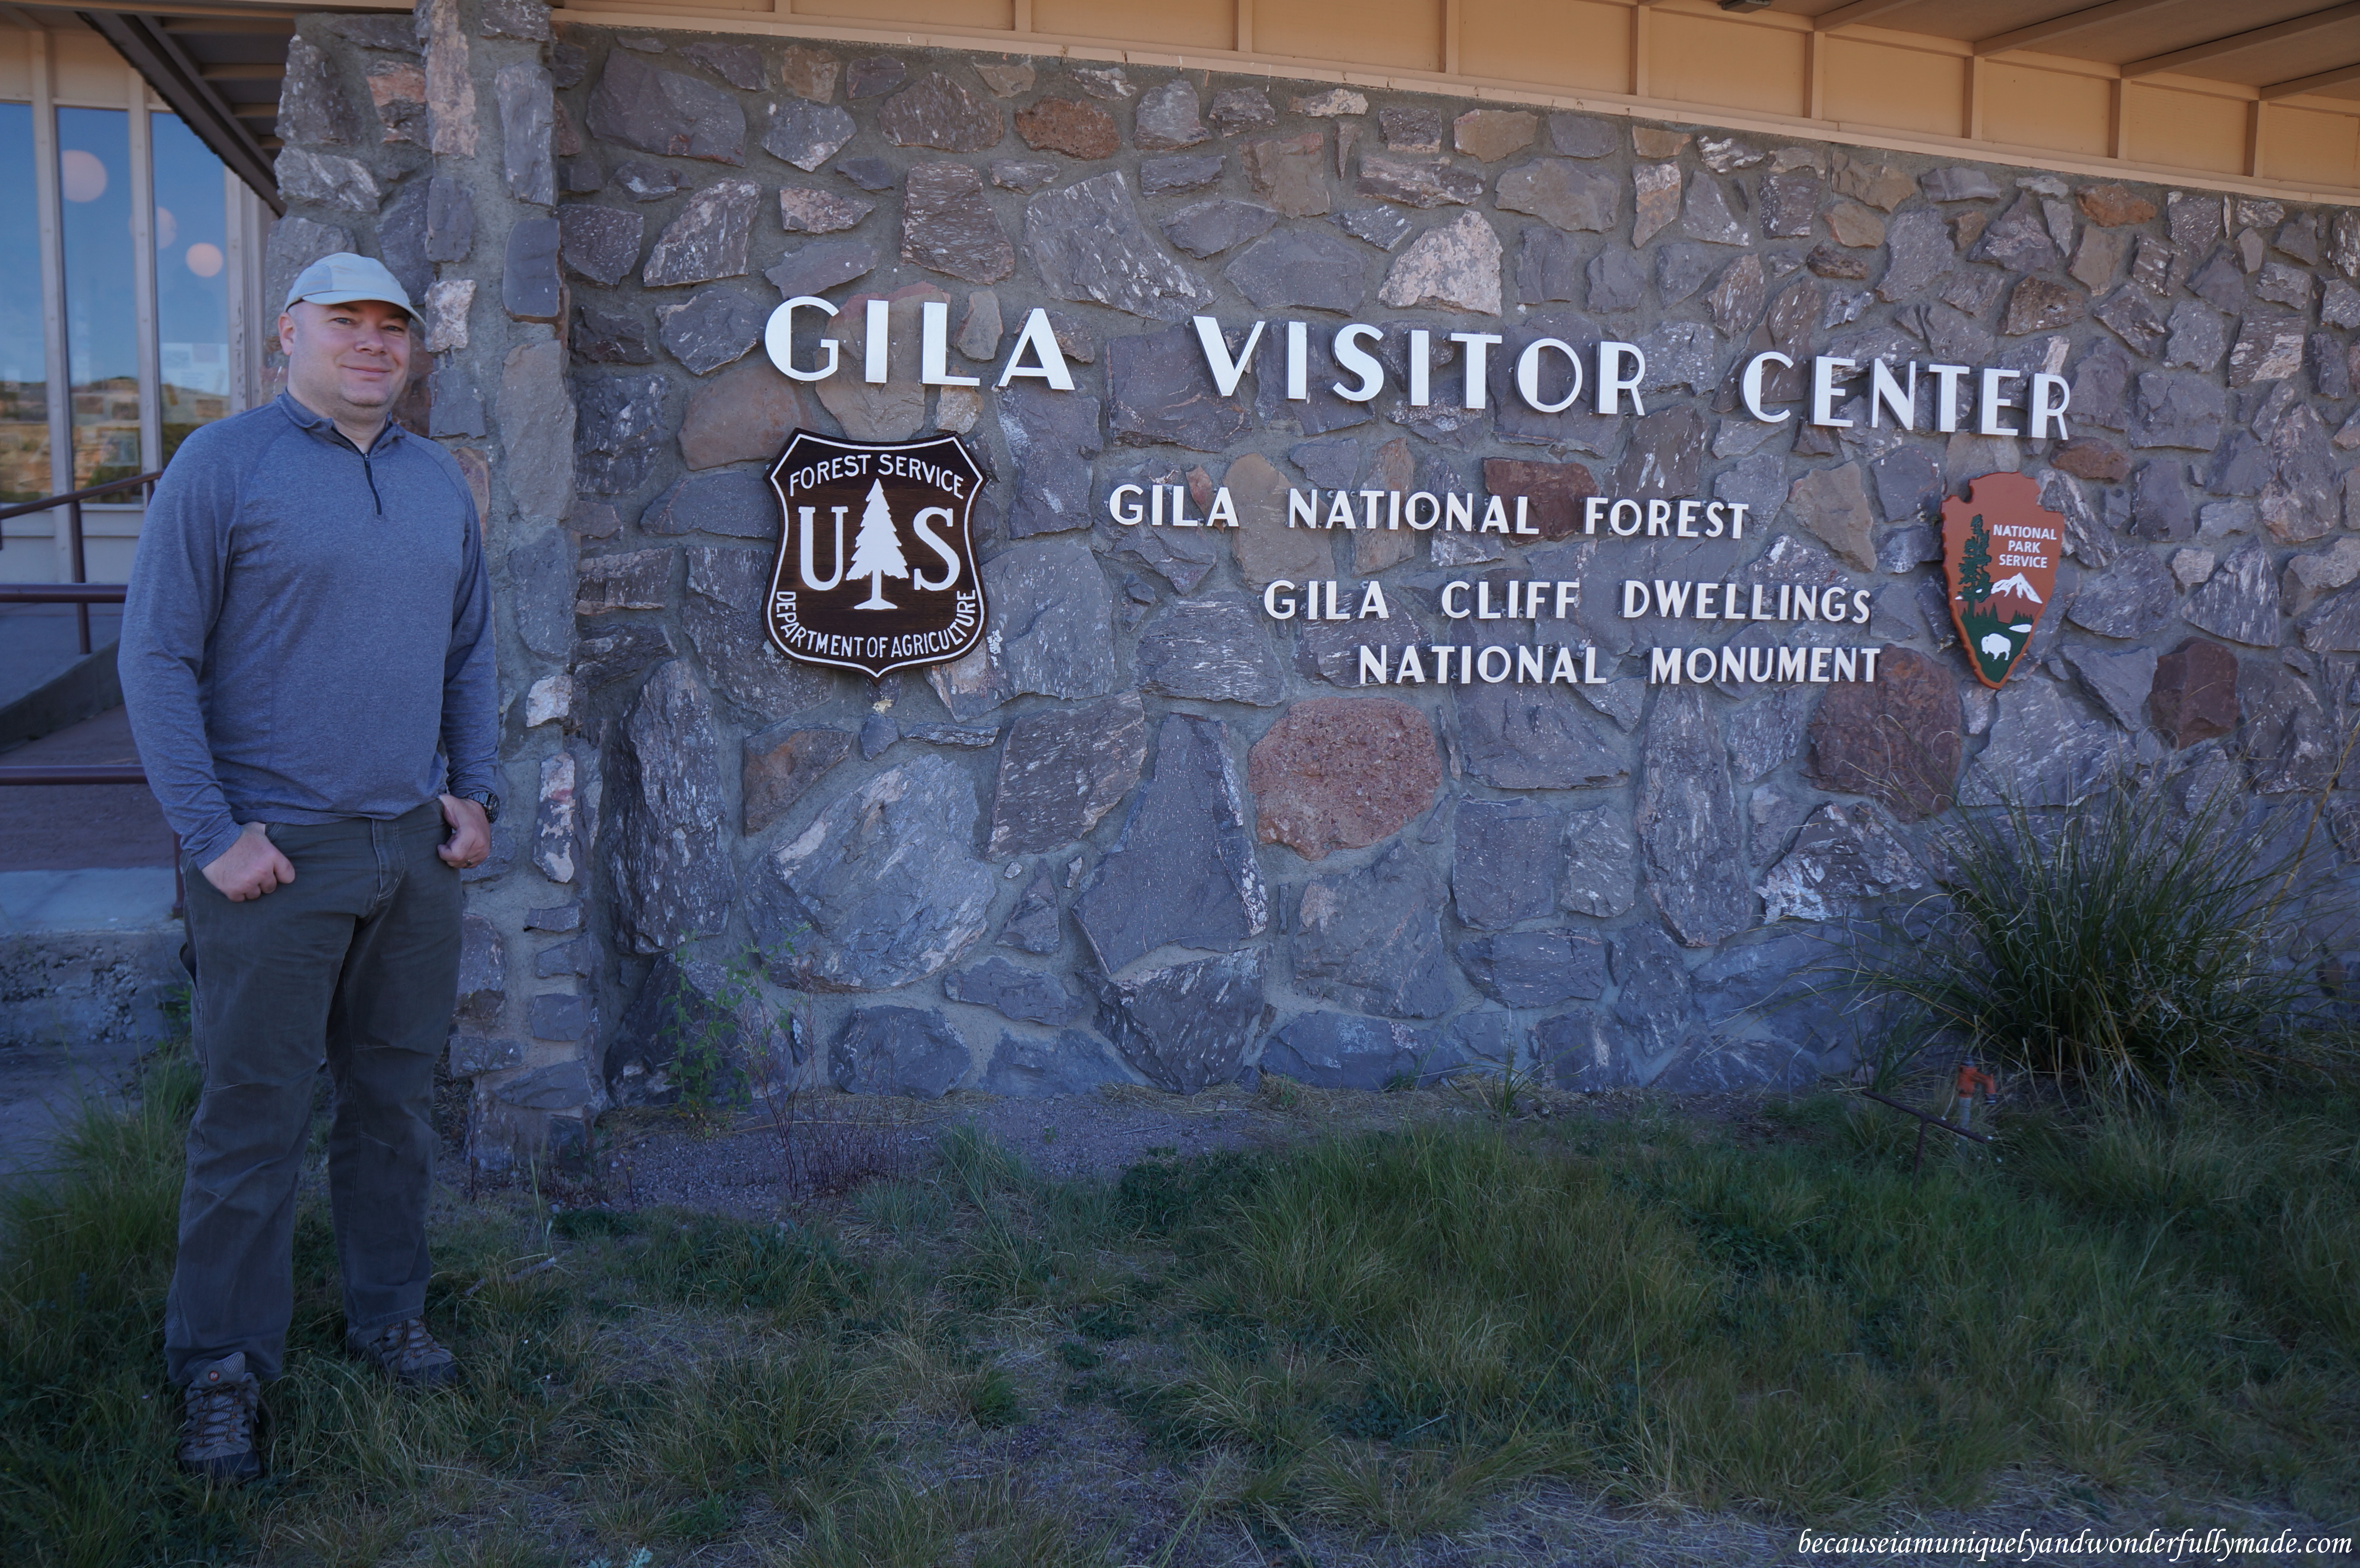 Inside Gila Visitor Center is a small museum celebrating the Mogollon culture.